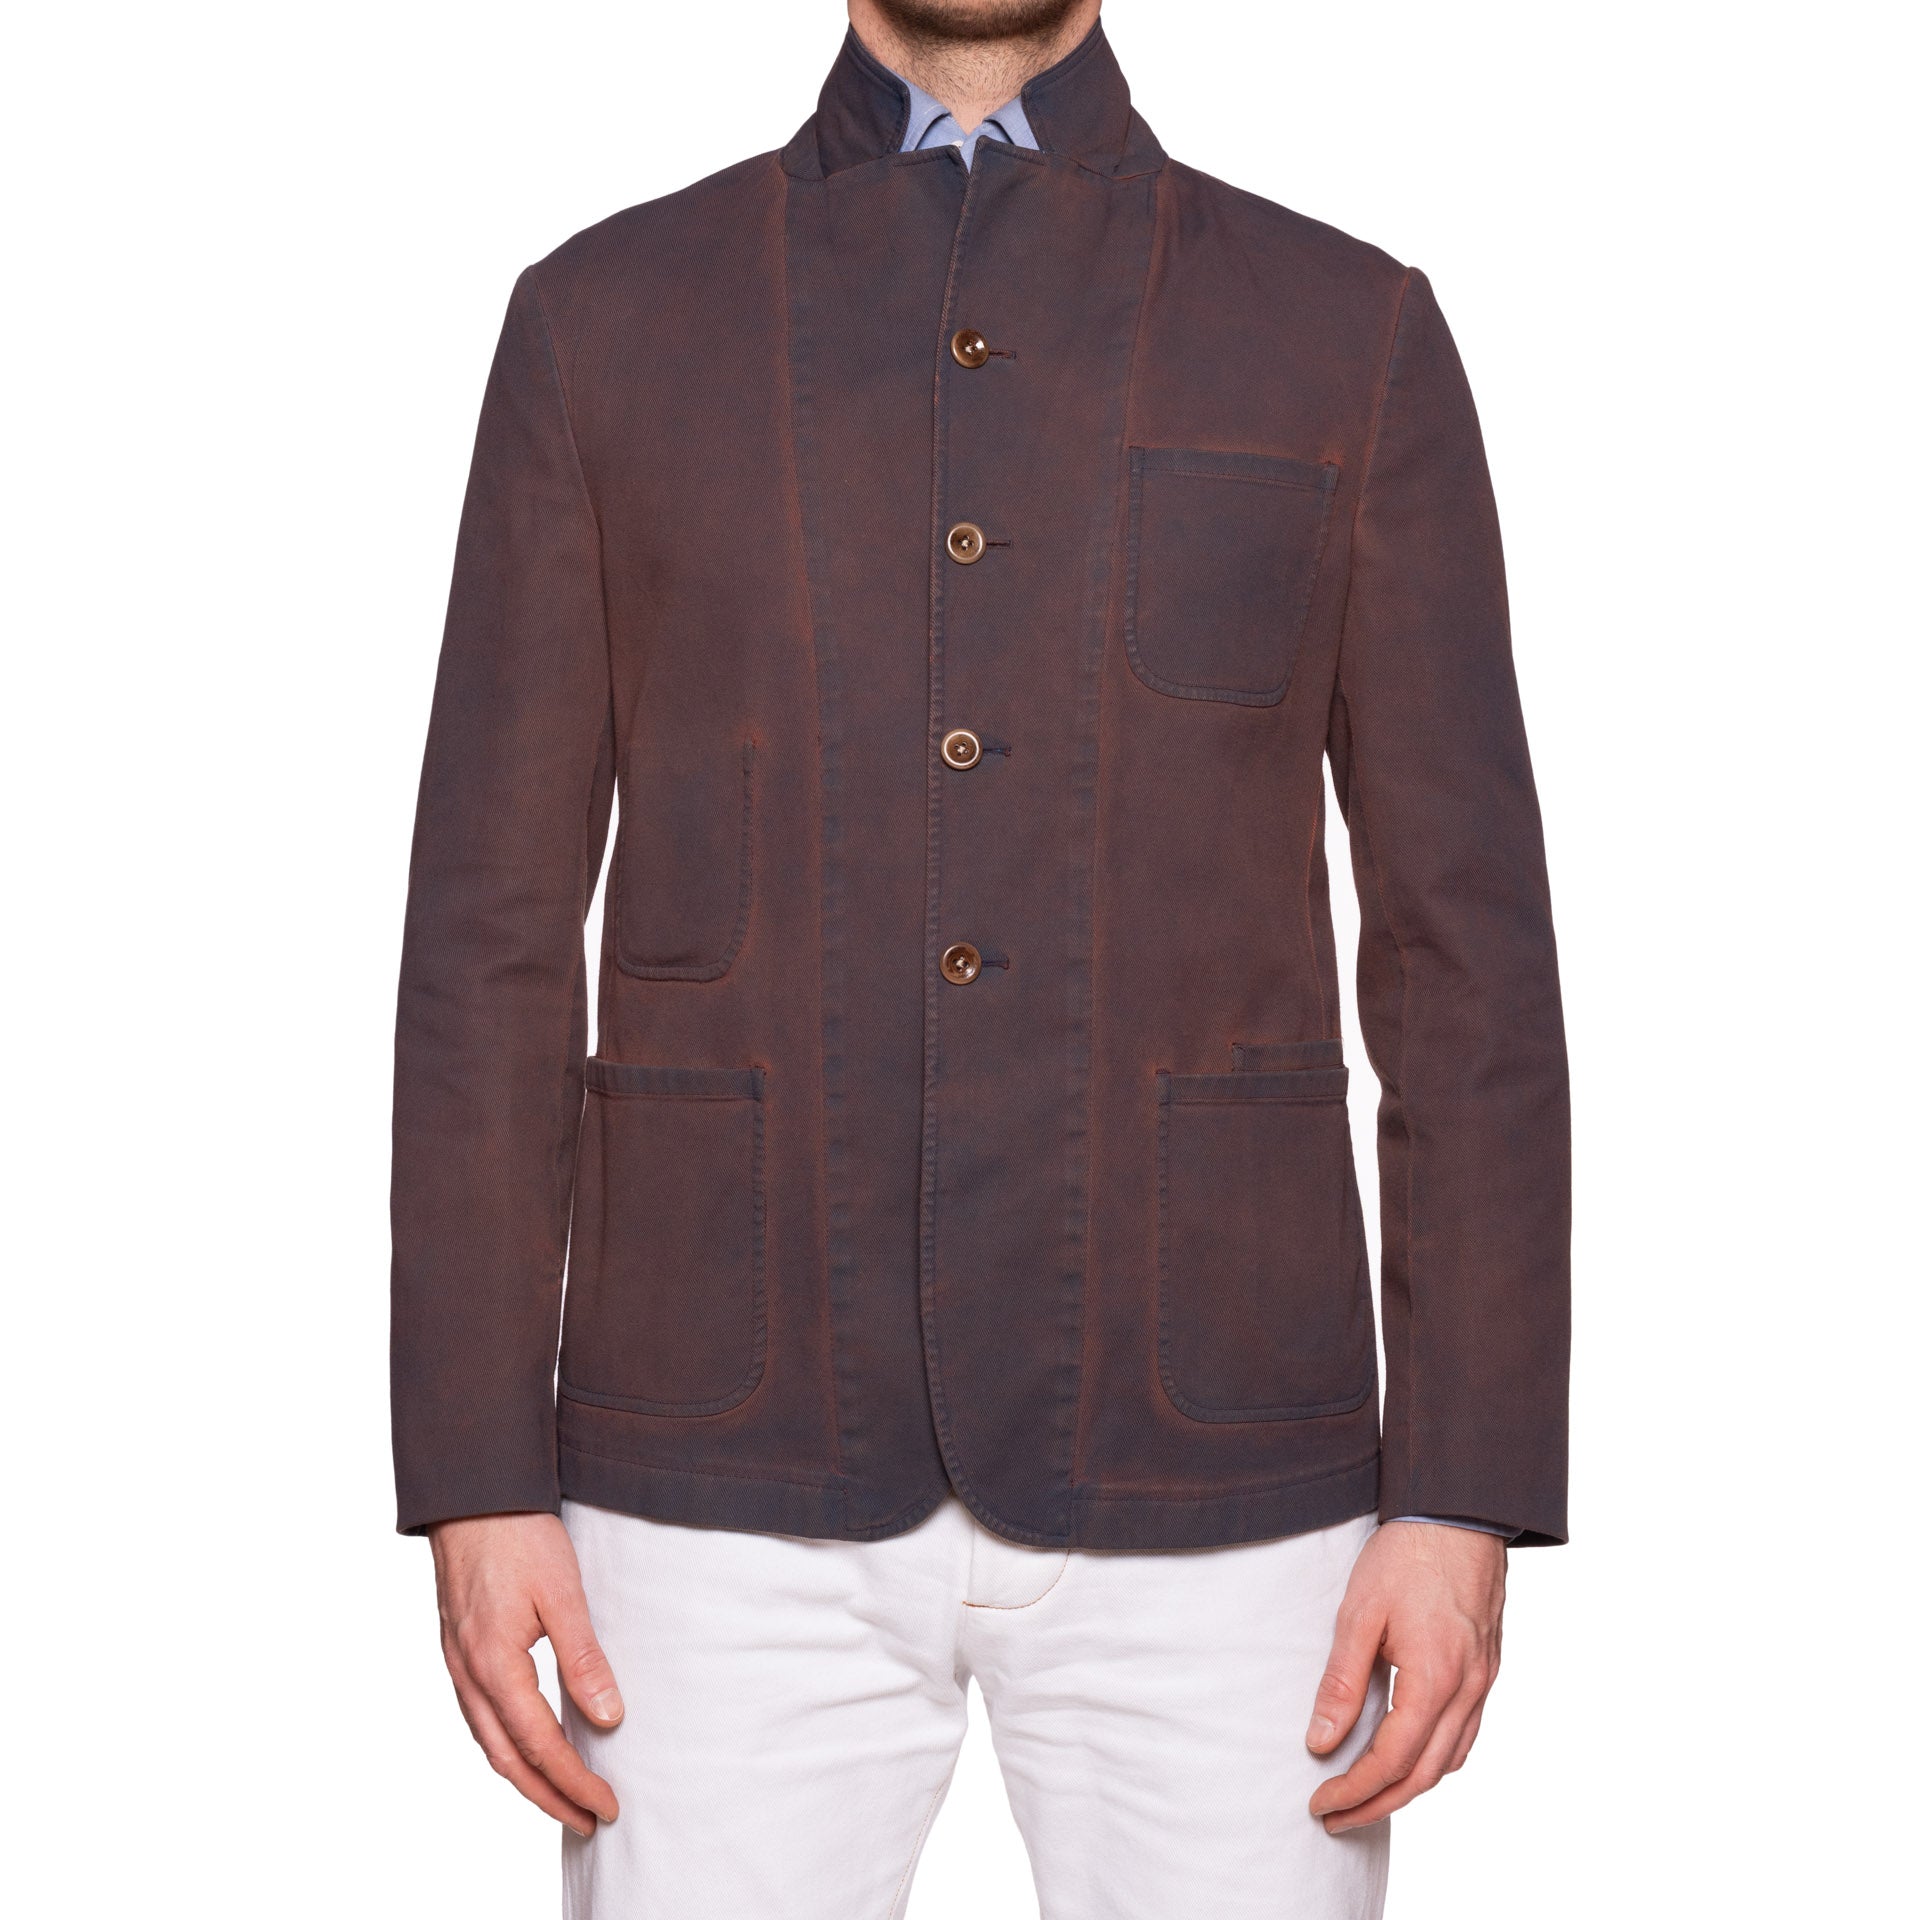 BOGLIOLI Galleria Garment Dyed Waxed Cotton 4 Button Jacket EU 50 NEW US 40 BOGLIOLI